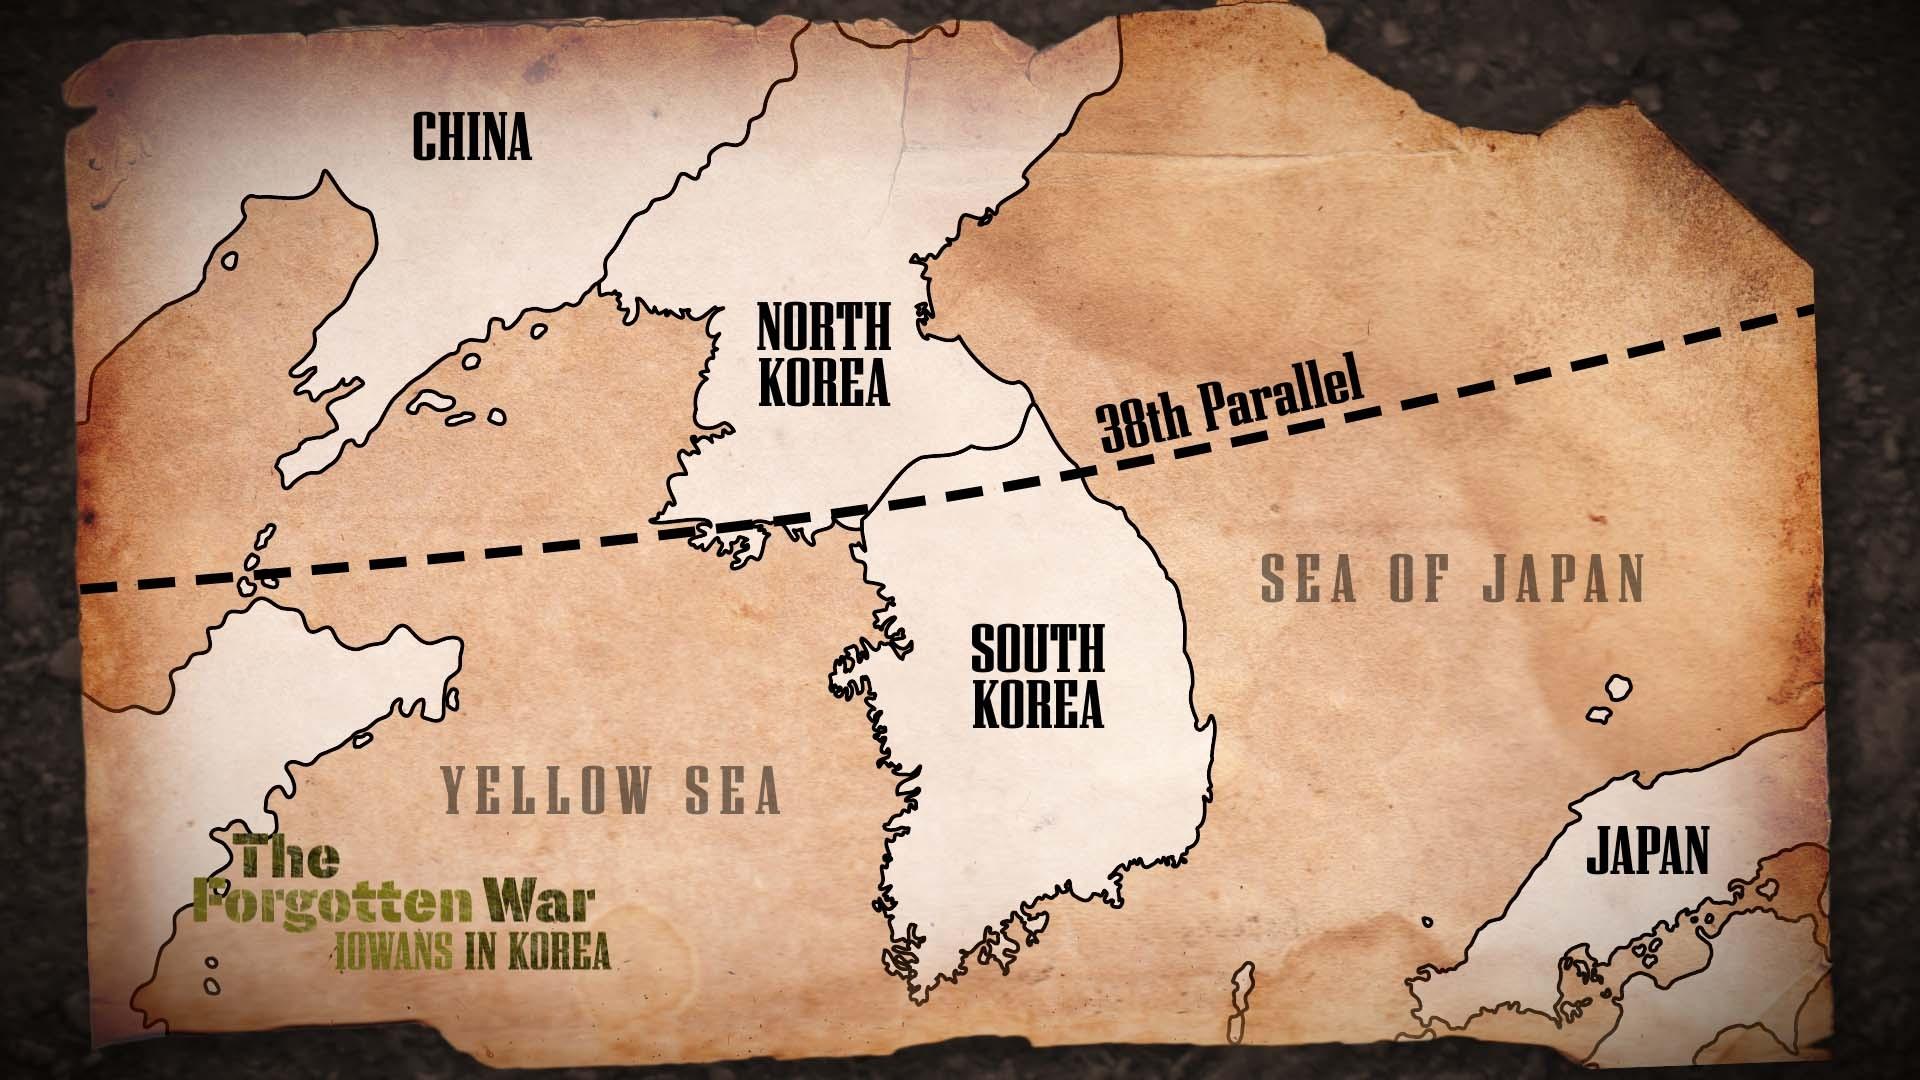 PBS Iowans In Korea Map 38 Parallel 